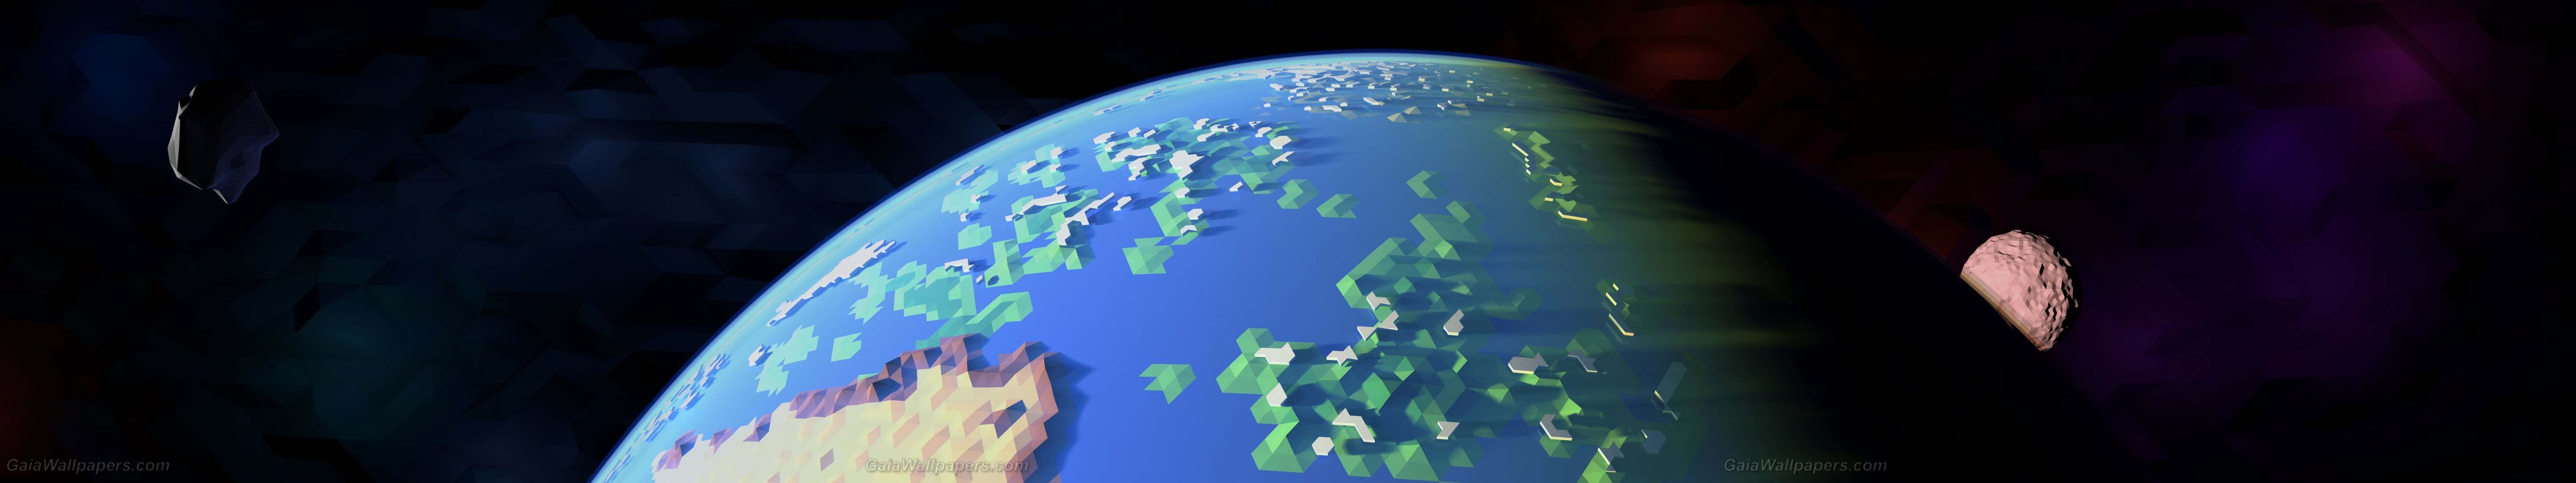 Polygonal earth in space - Free desktop wallpapers